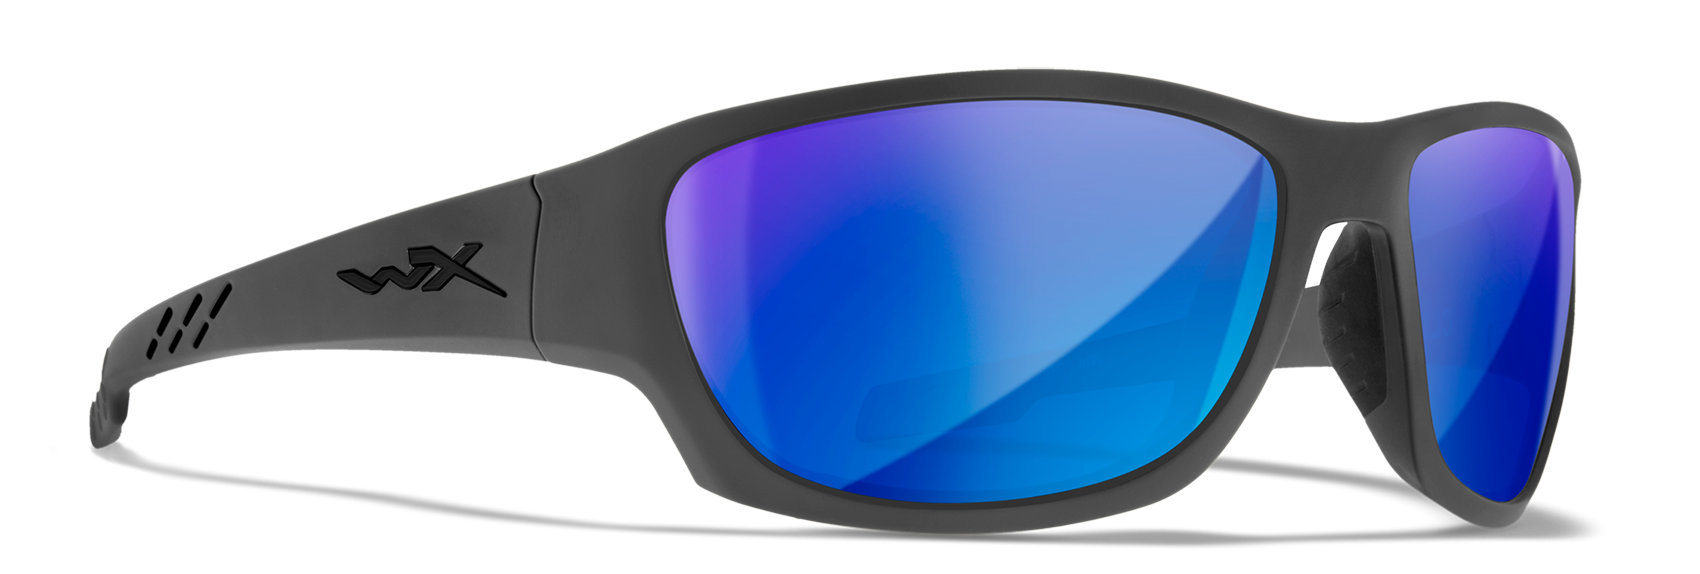 Wiley X Climb Sunglasses, 2 colors